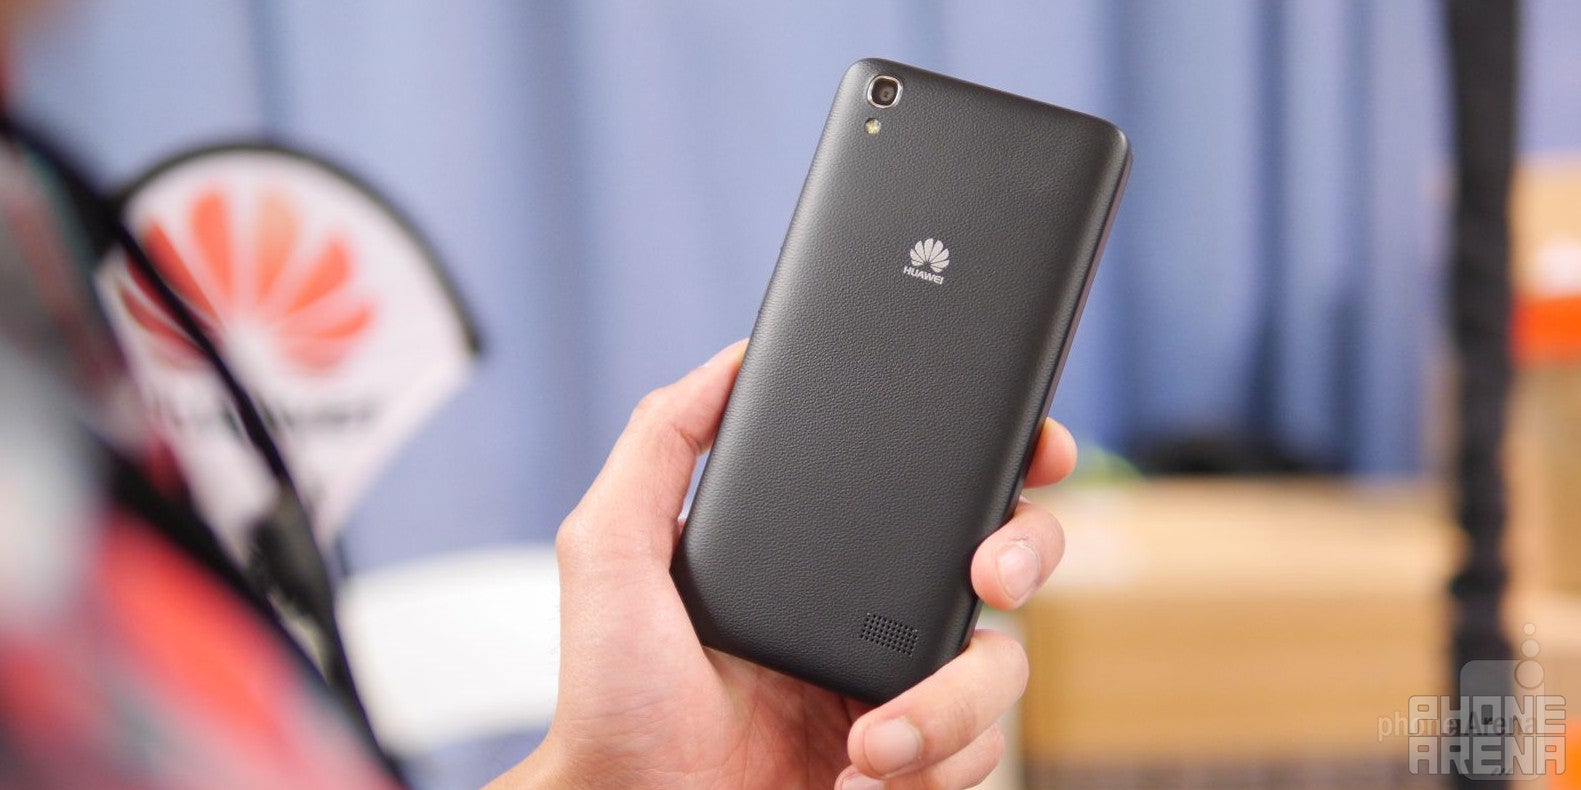 Huawei SnapTo hands-on